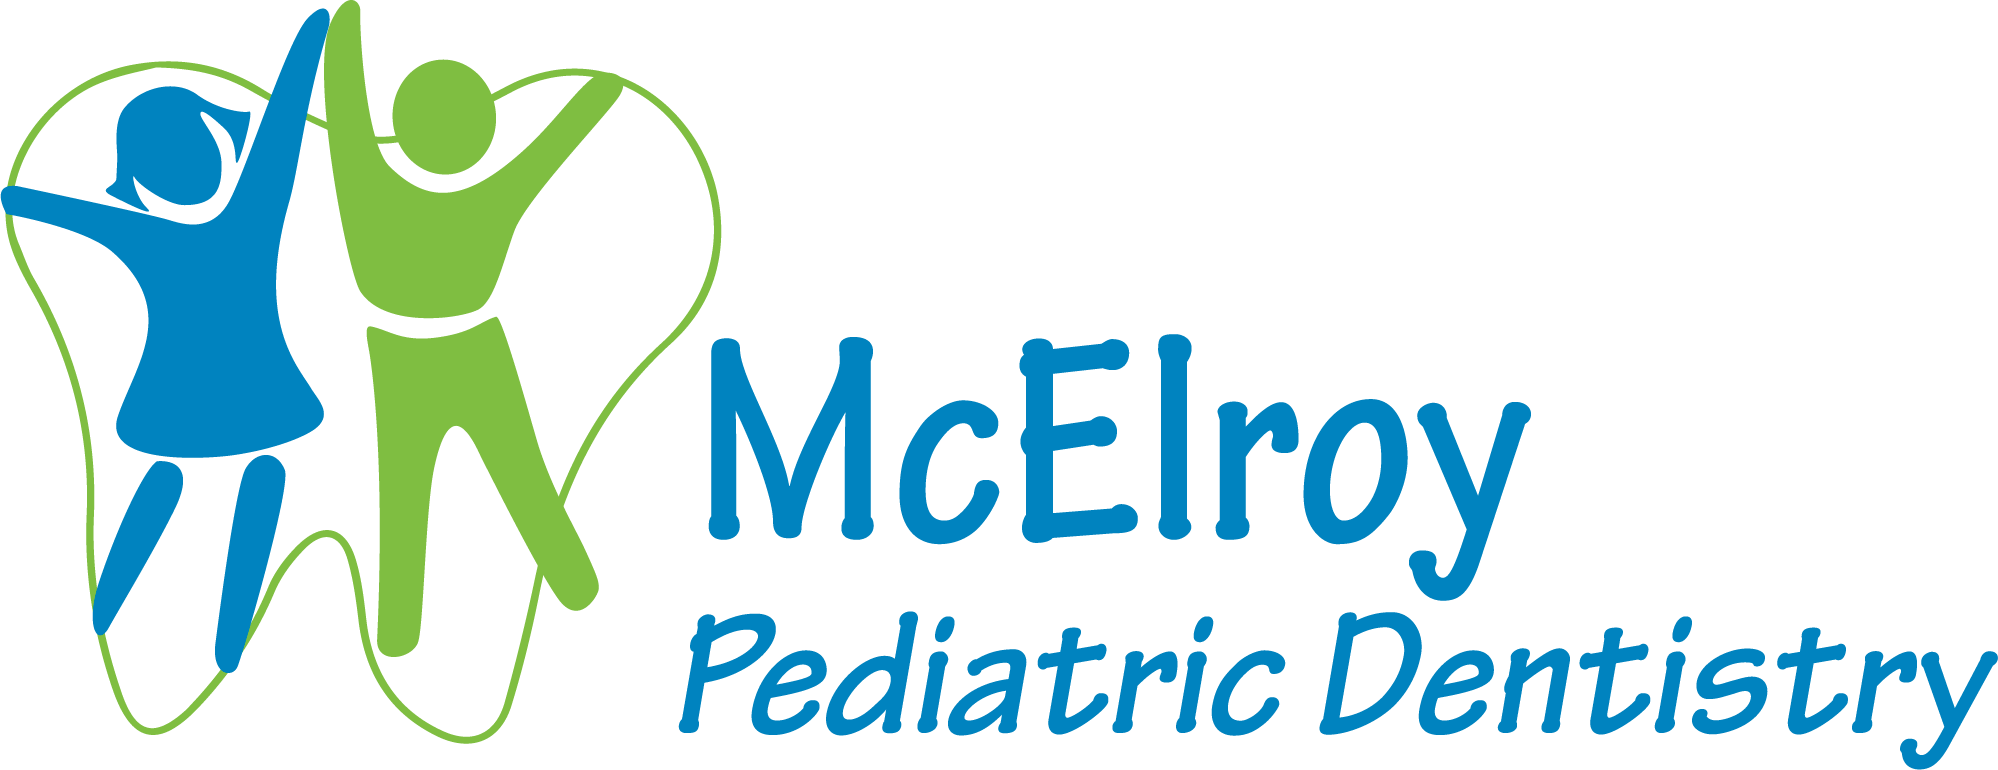 McElroy Pediatric Dentistry Logo